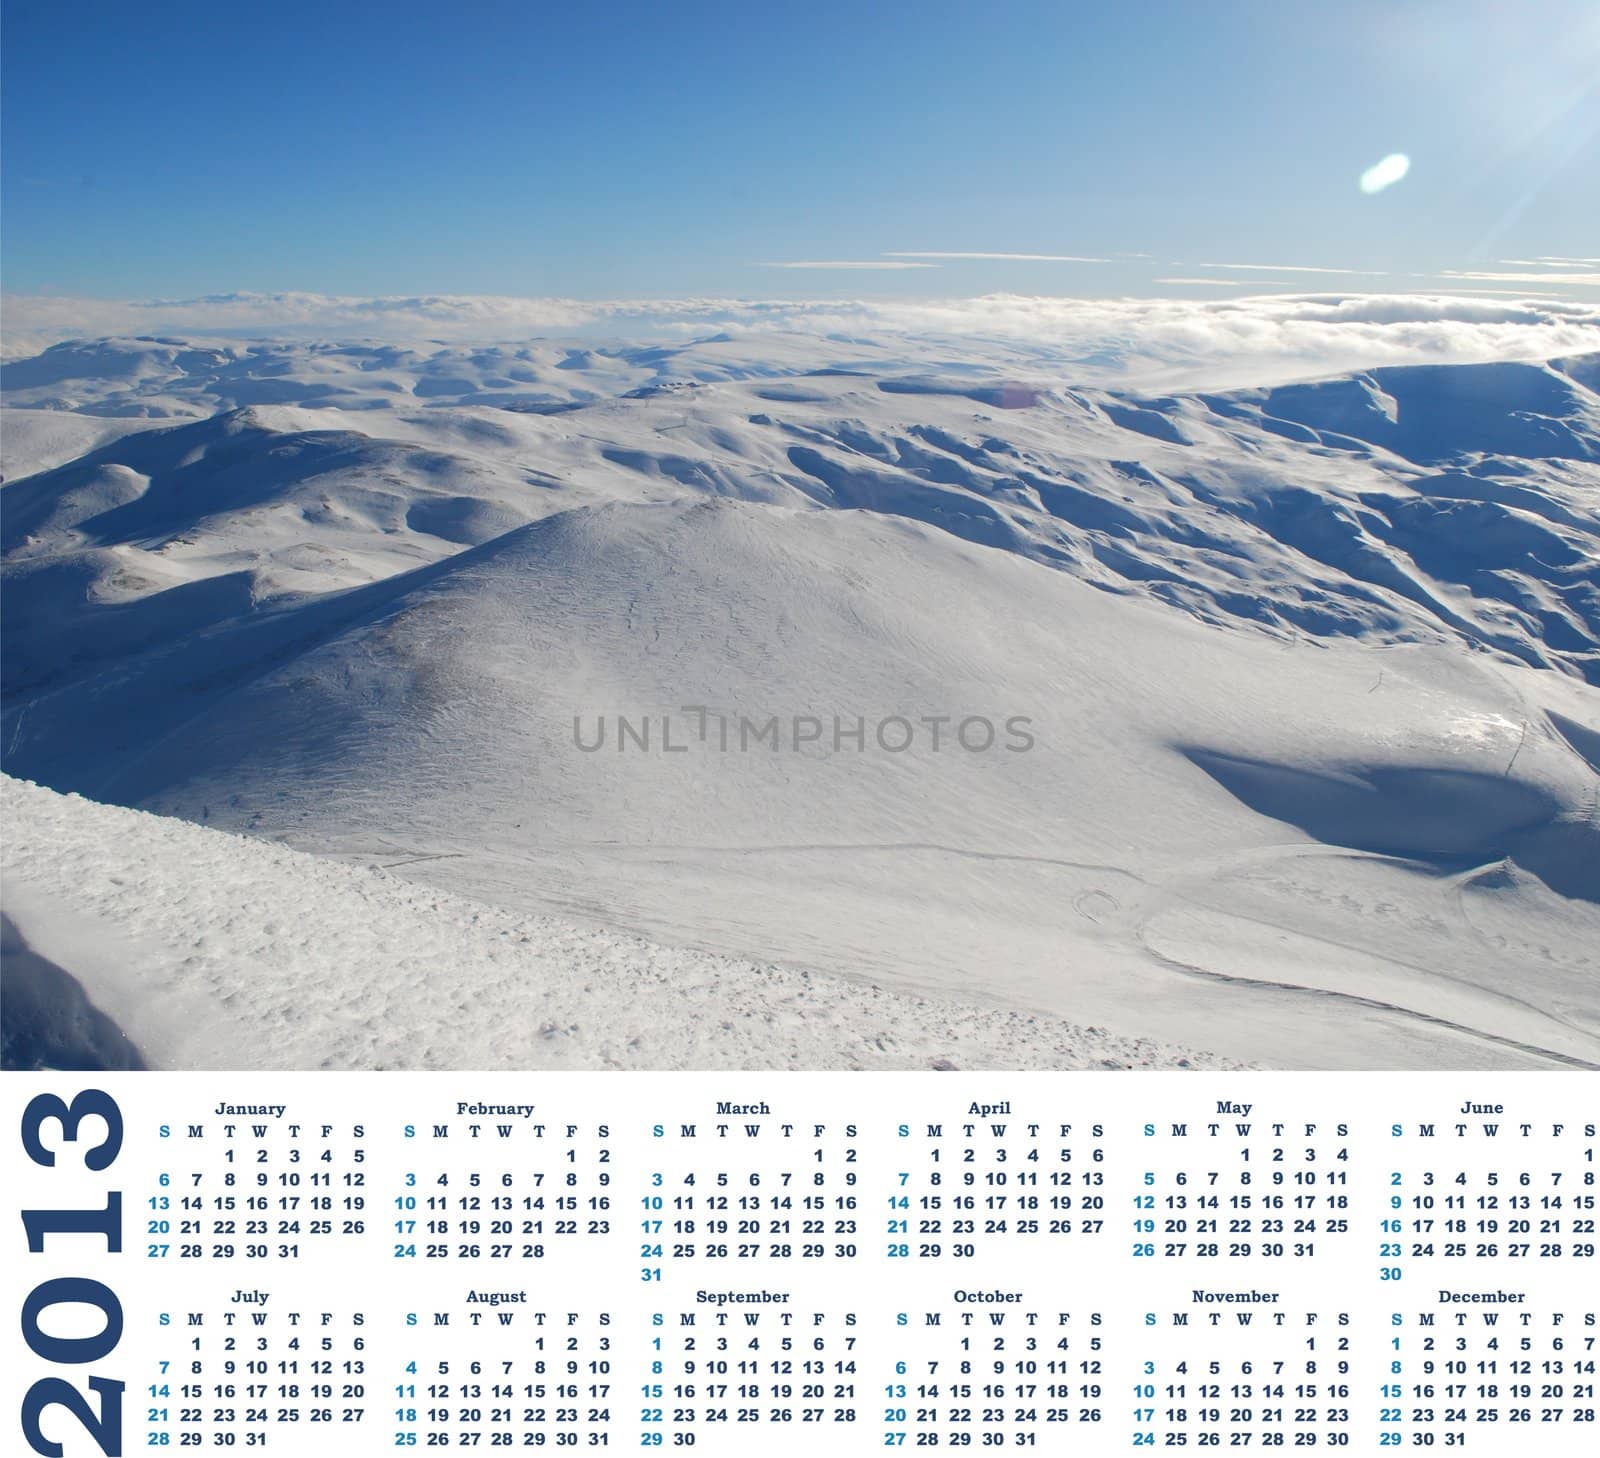  calendar 2013  with view of snow mountains in Turkey Palandoken Erzurum ski resort  by svtrotof